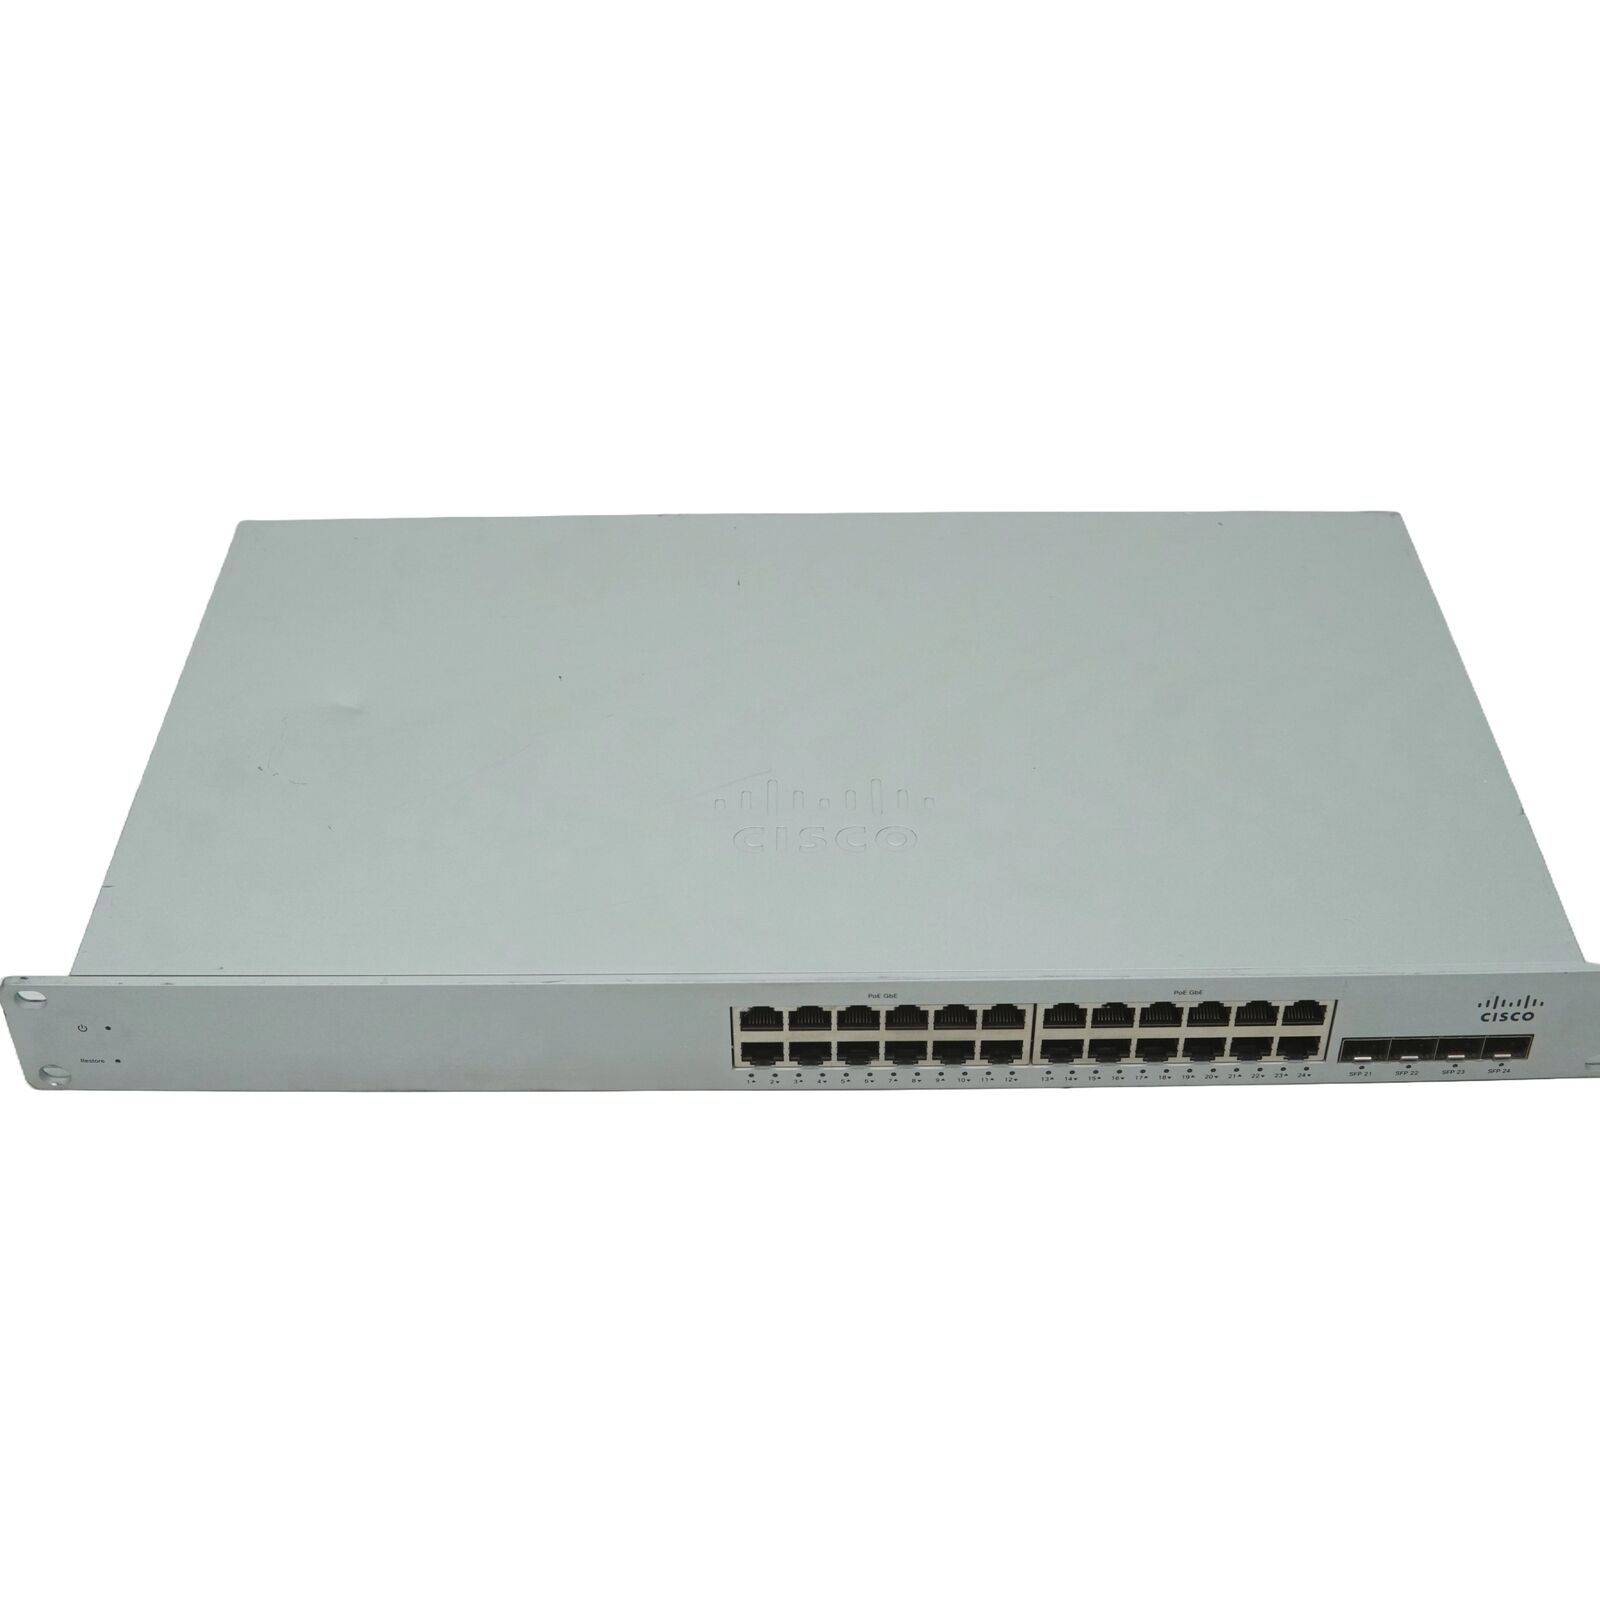 Cisco Meraki 24-Port Gigabit Cloud Managed Switch MS220-24P **UNCLAIMED**